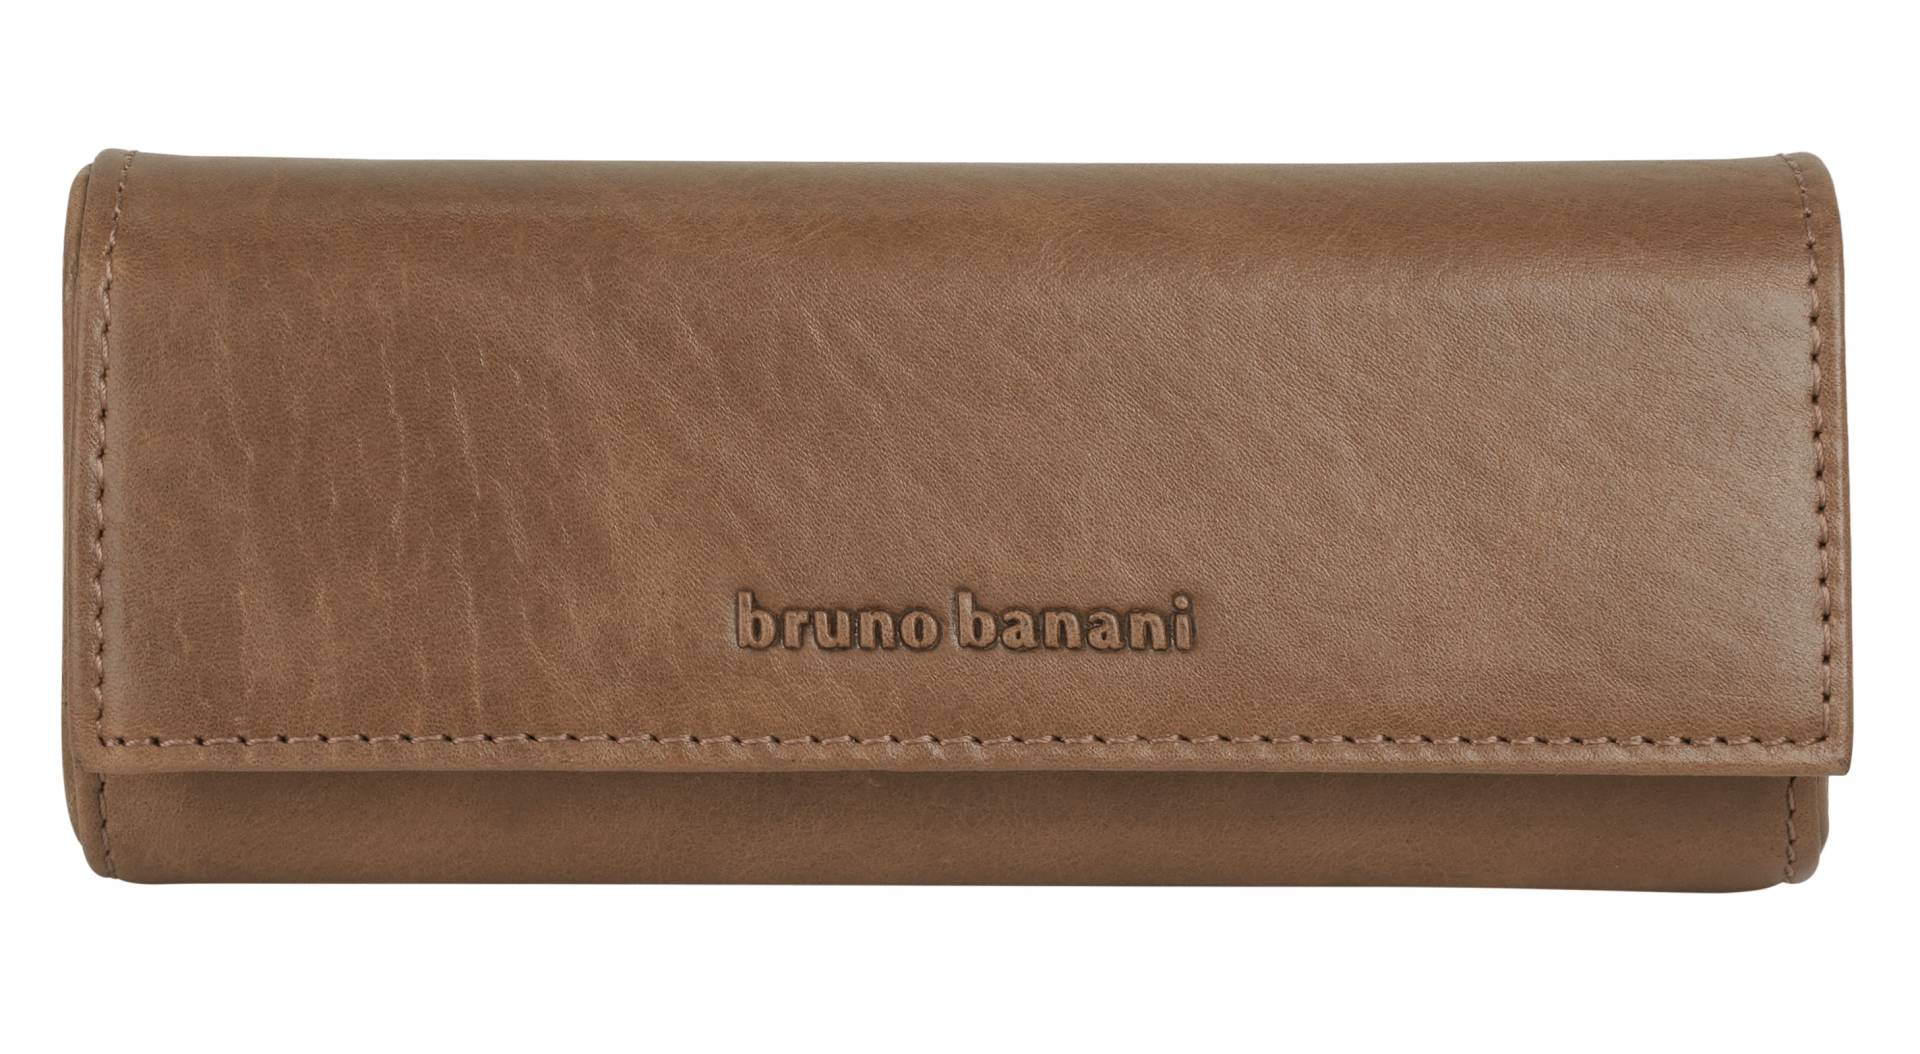 Bruno Banani Brustbeutel von Bruno Banani